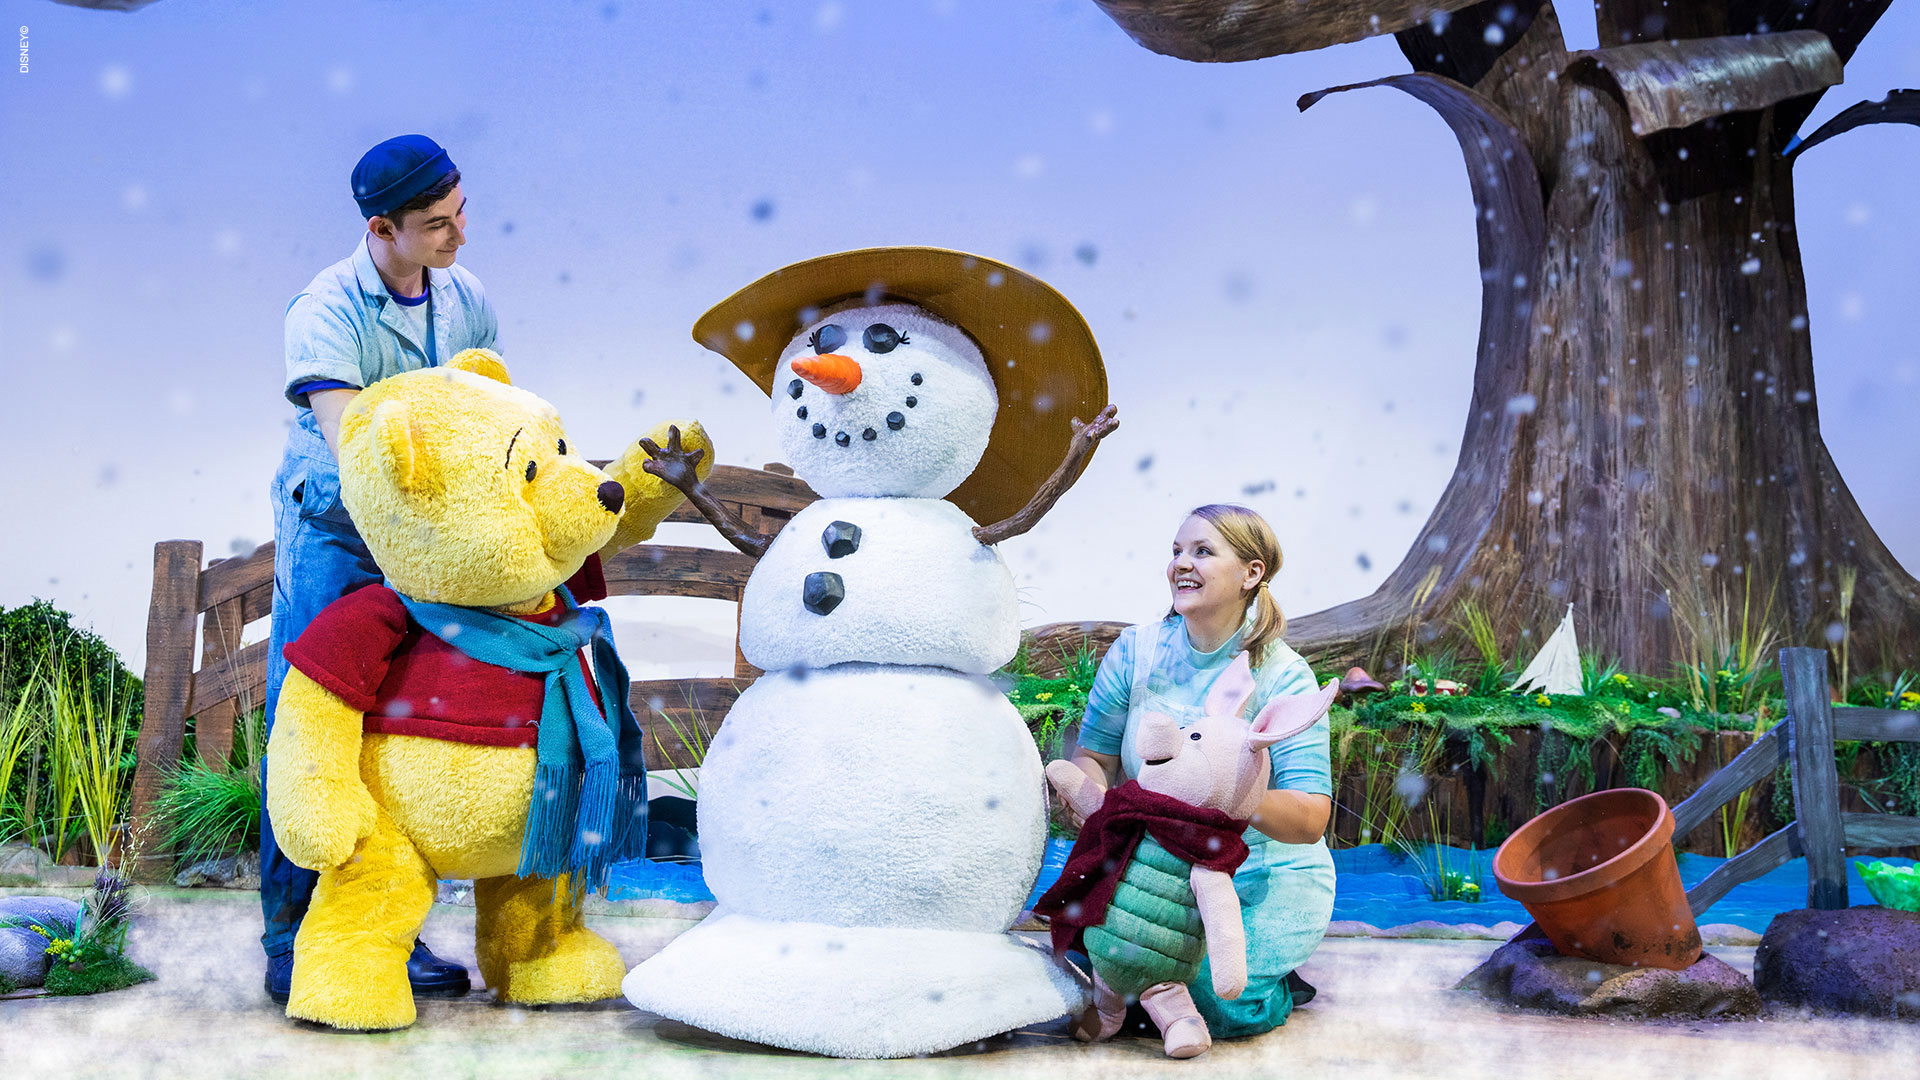 Disney's Winnie the Pooh: The New Musical Stage Adaptation - Charleston  Gaillard Center